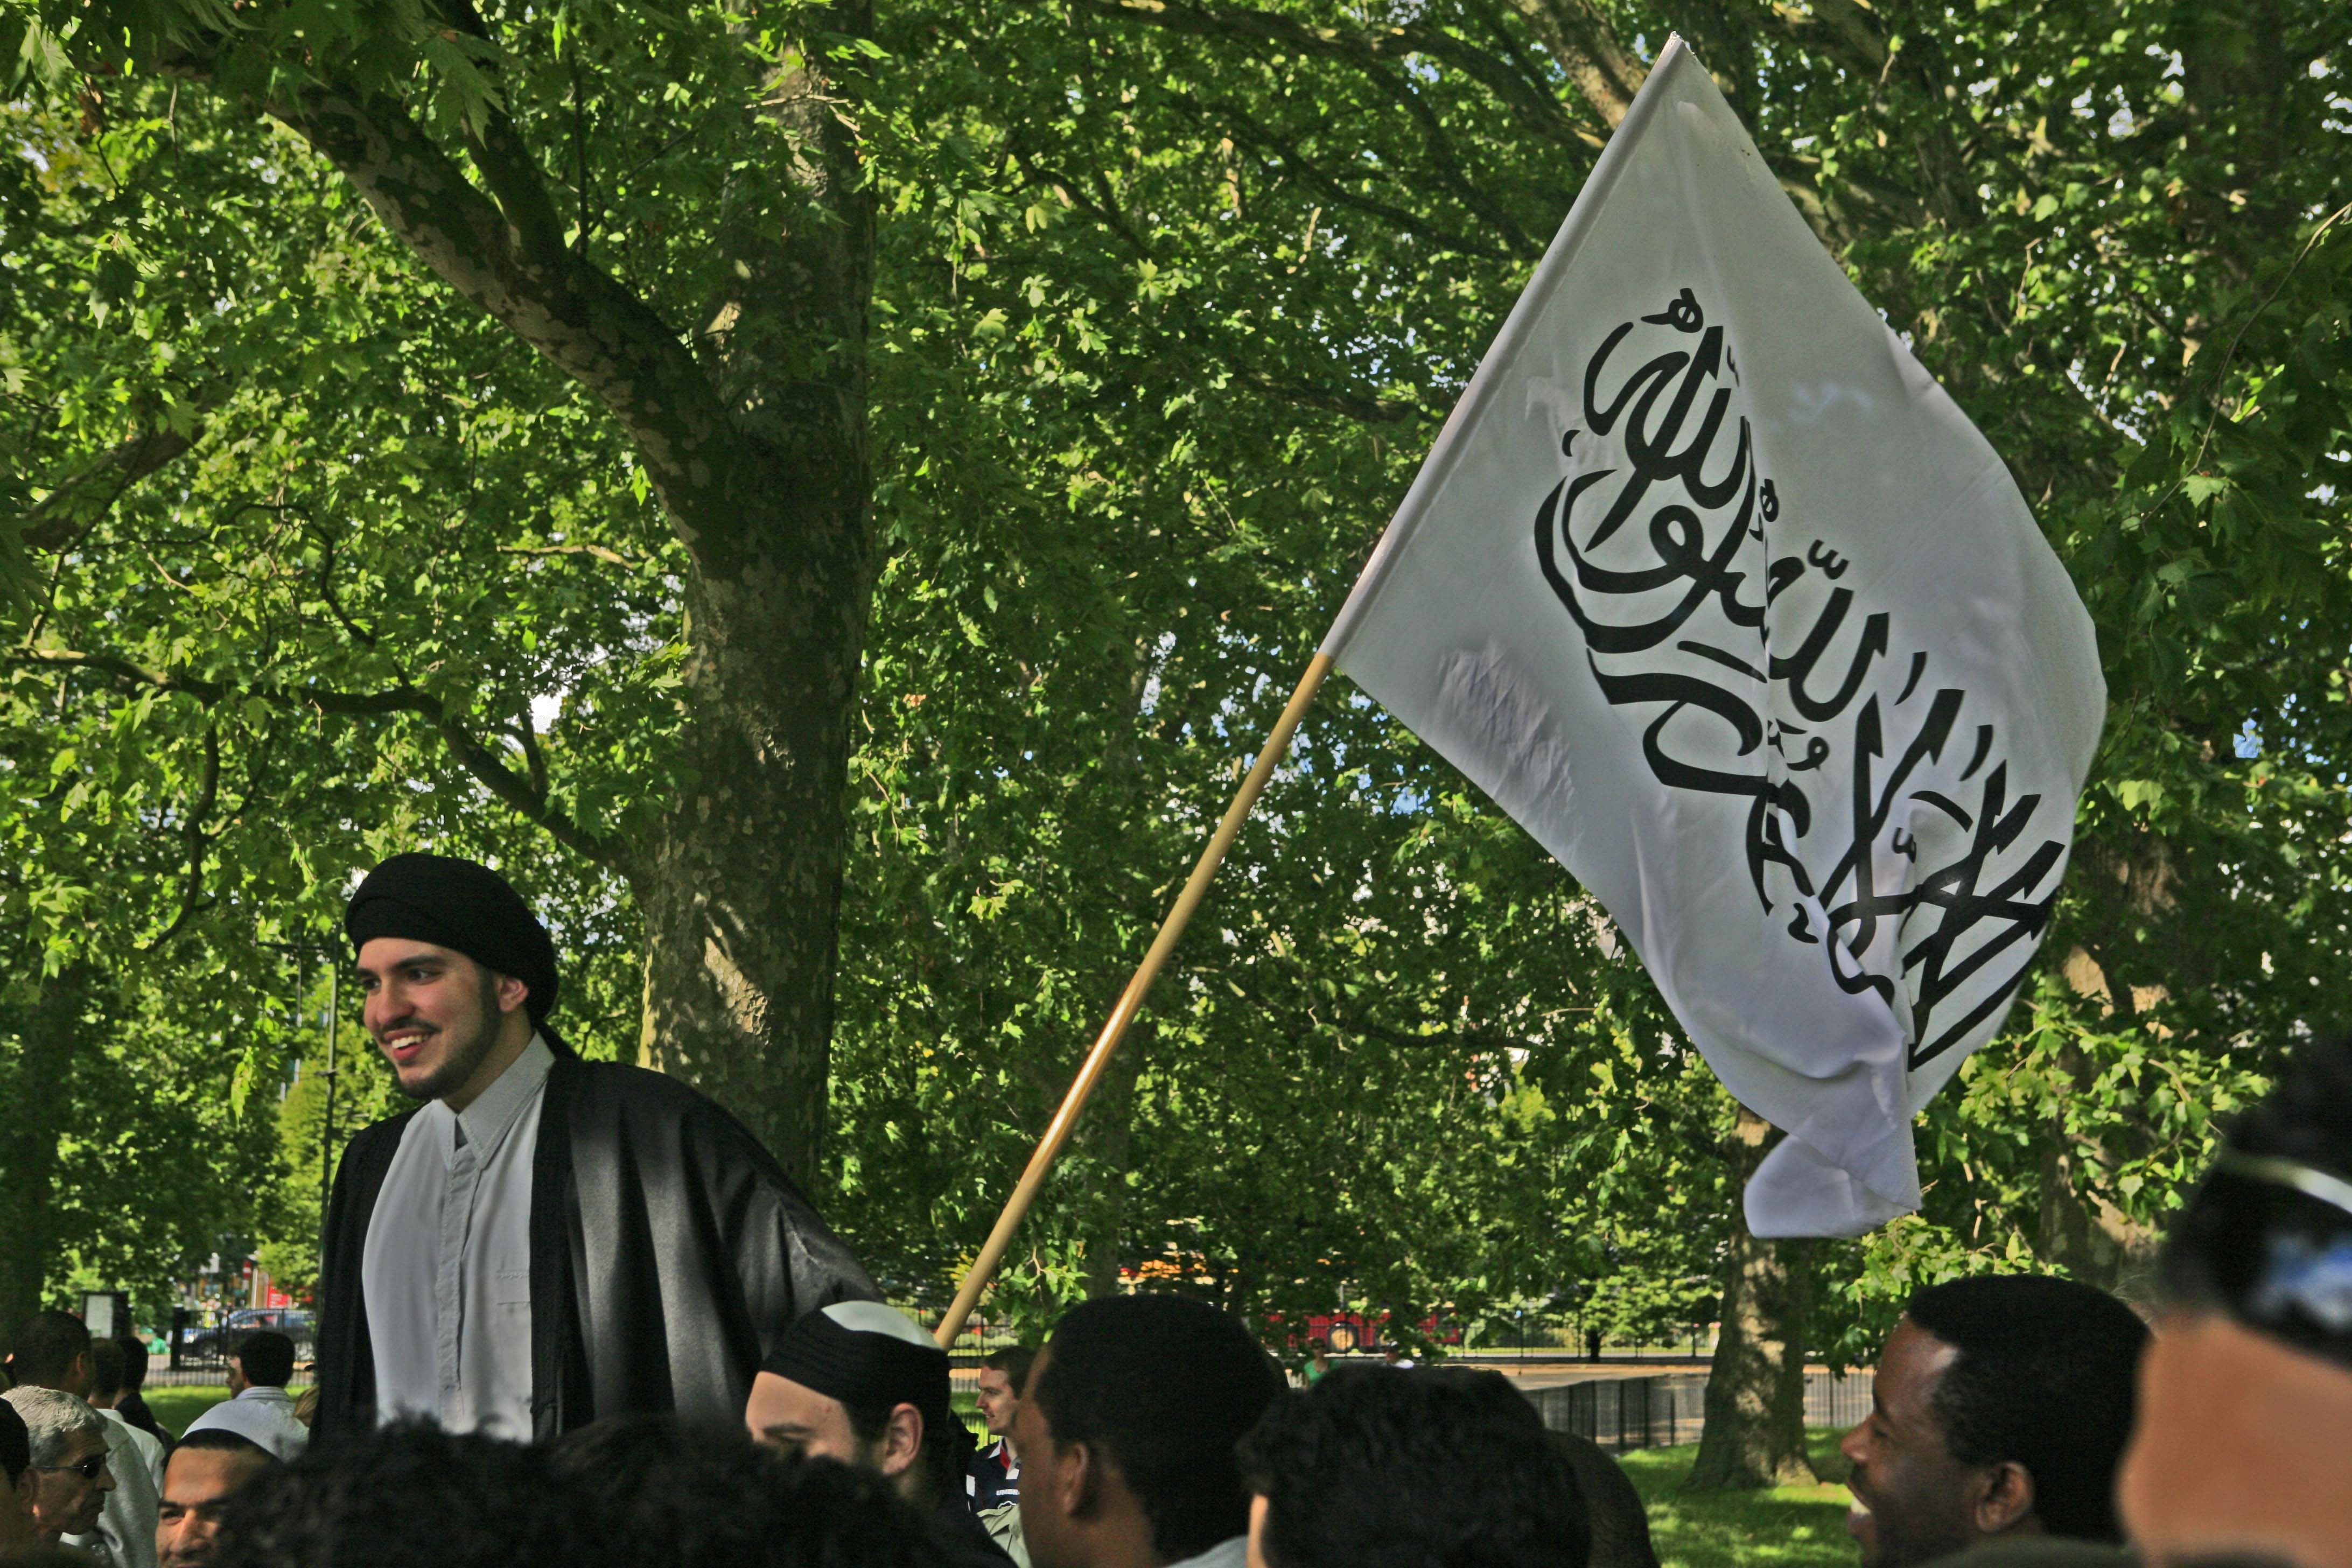 taliban in londonistan......